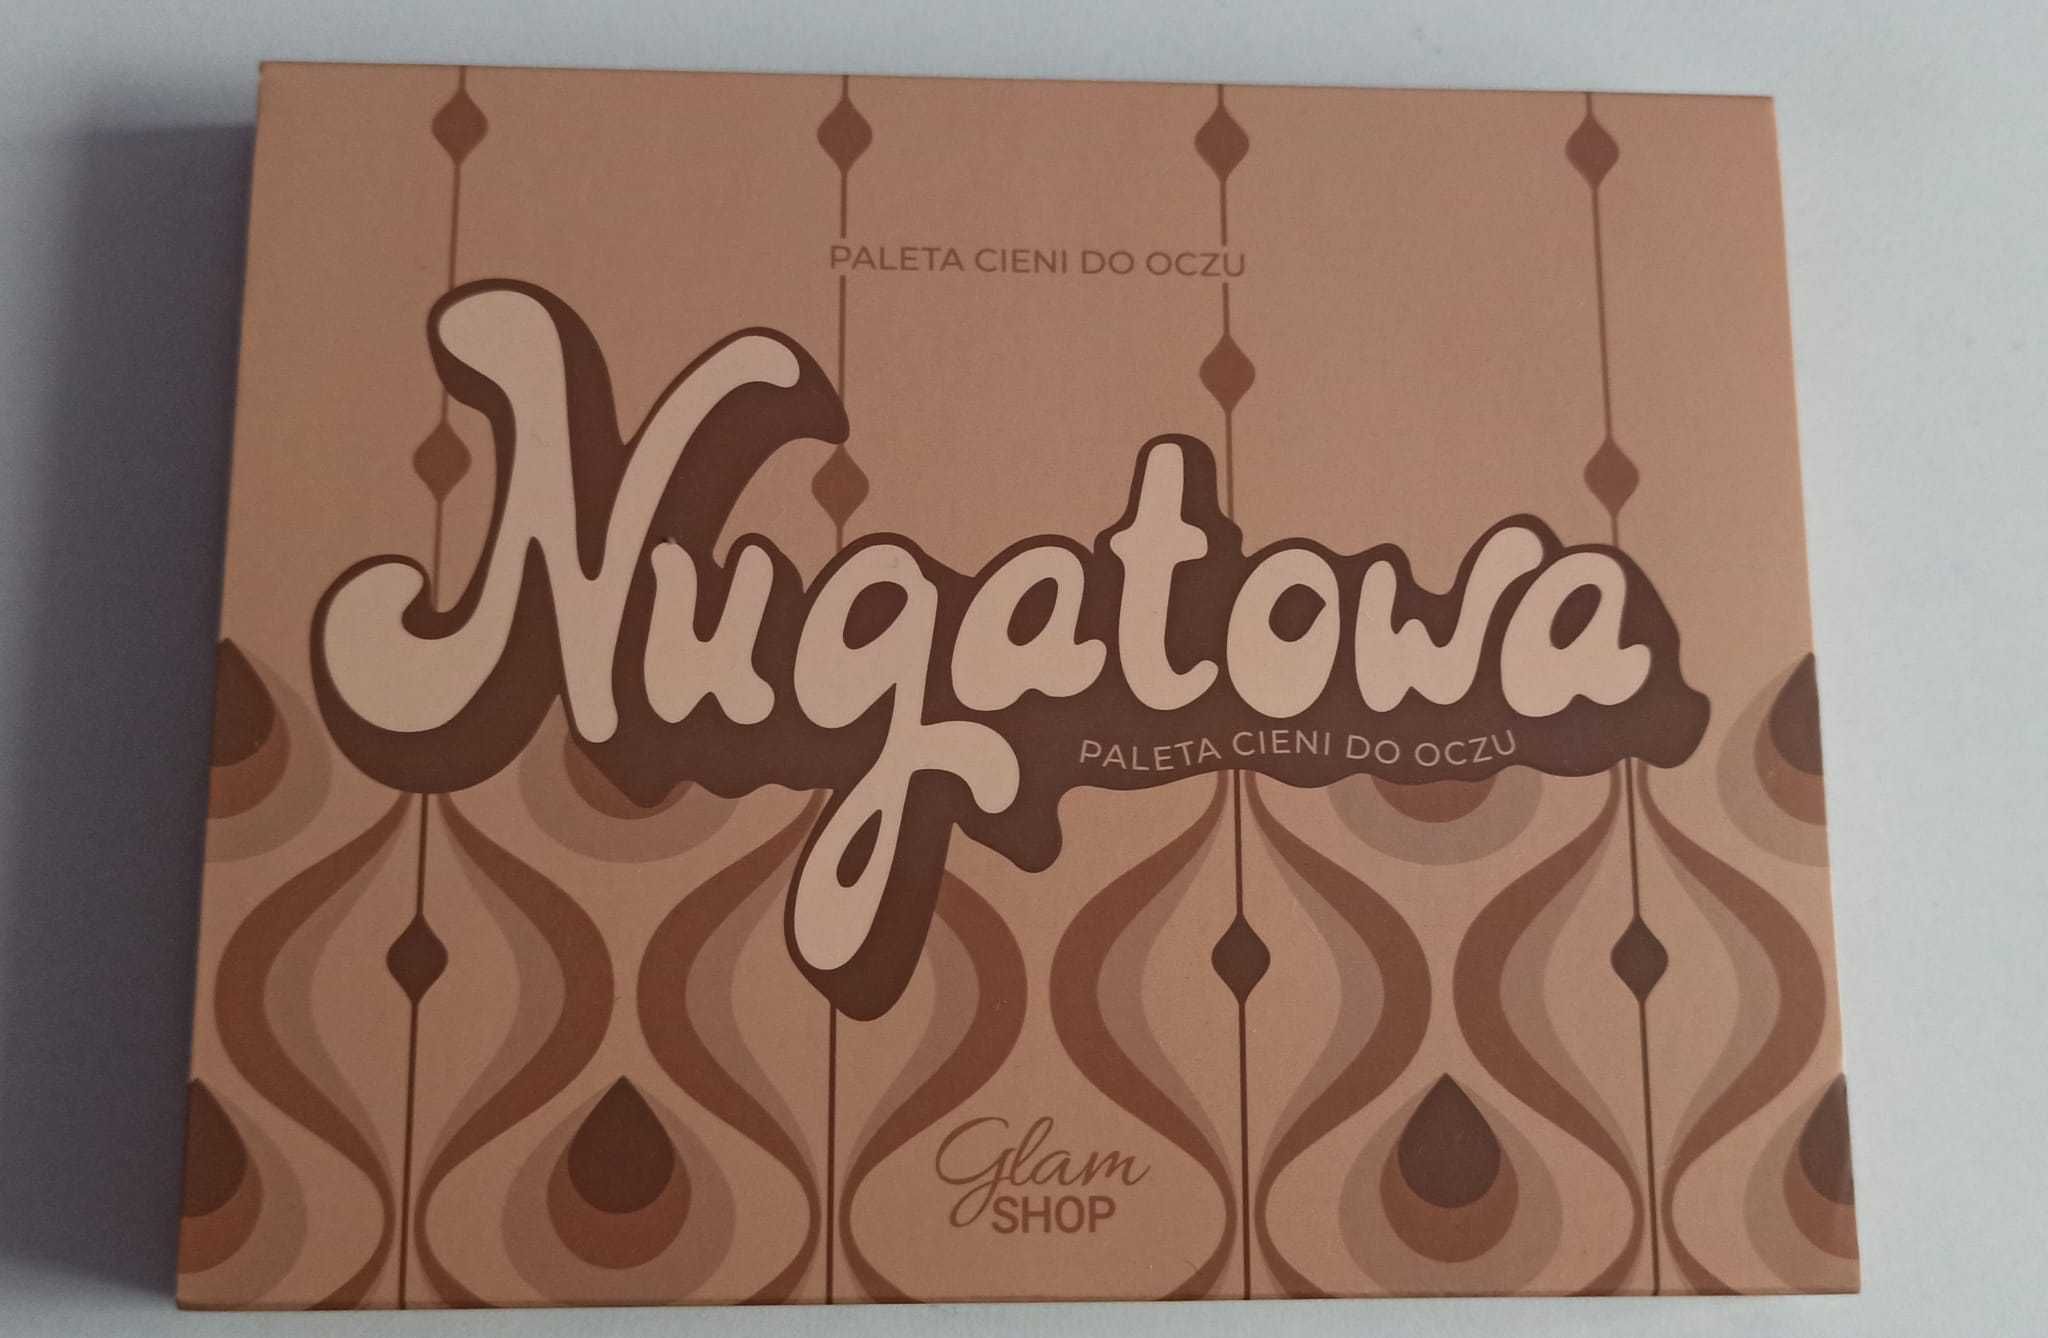 Nowa paleta Nugatowa Glamshop